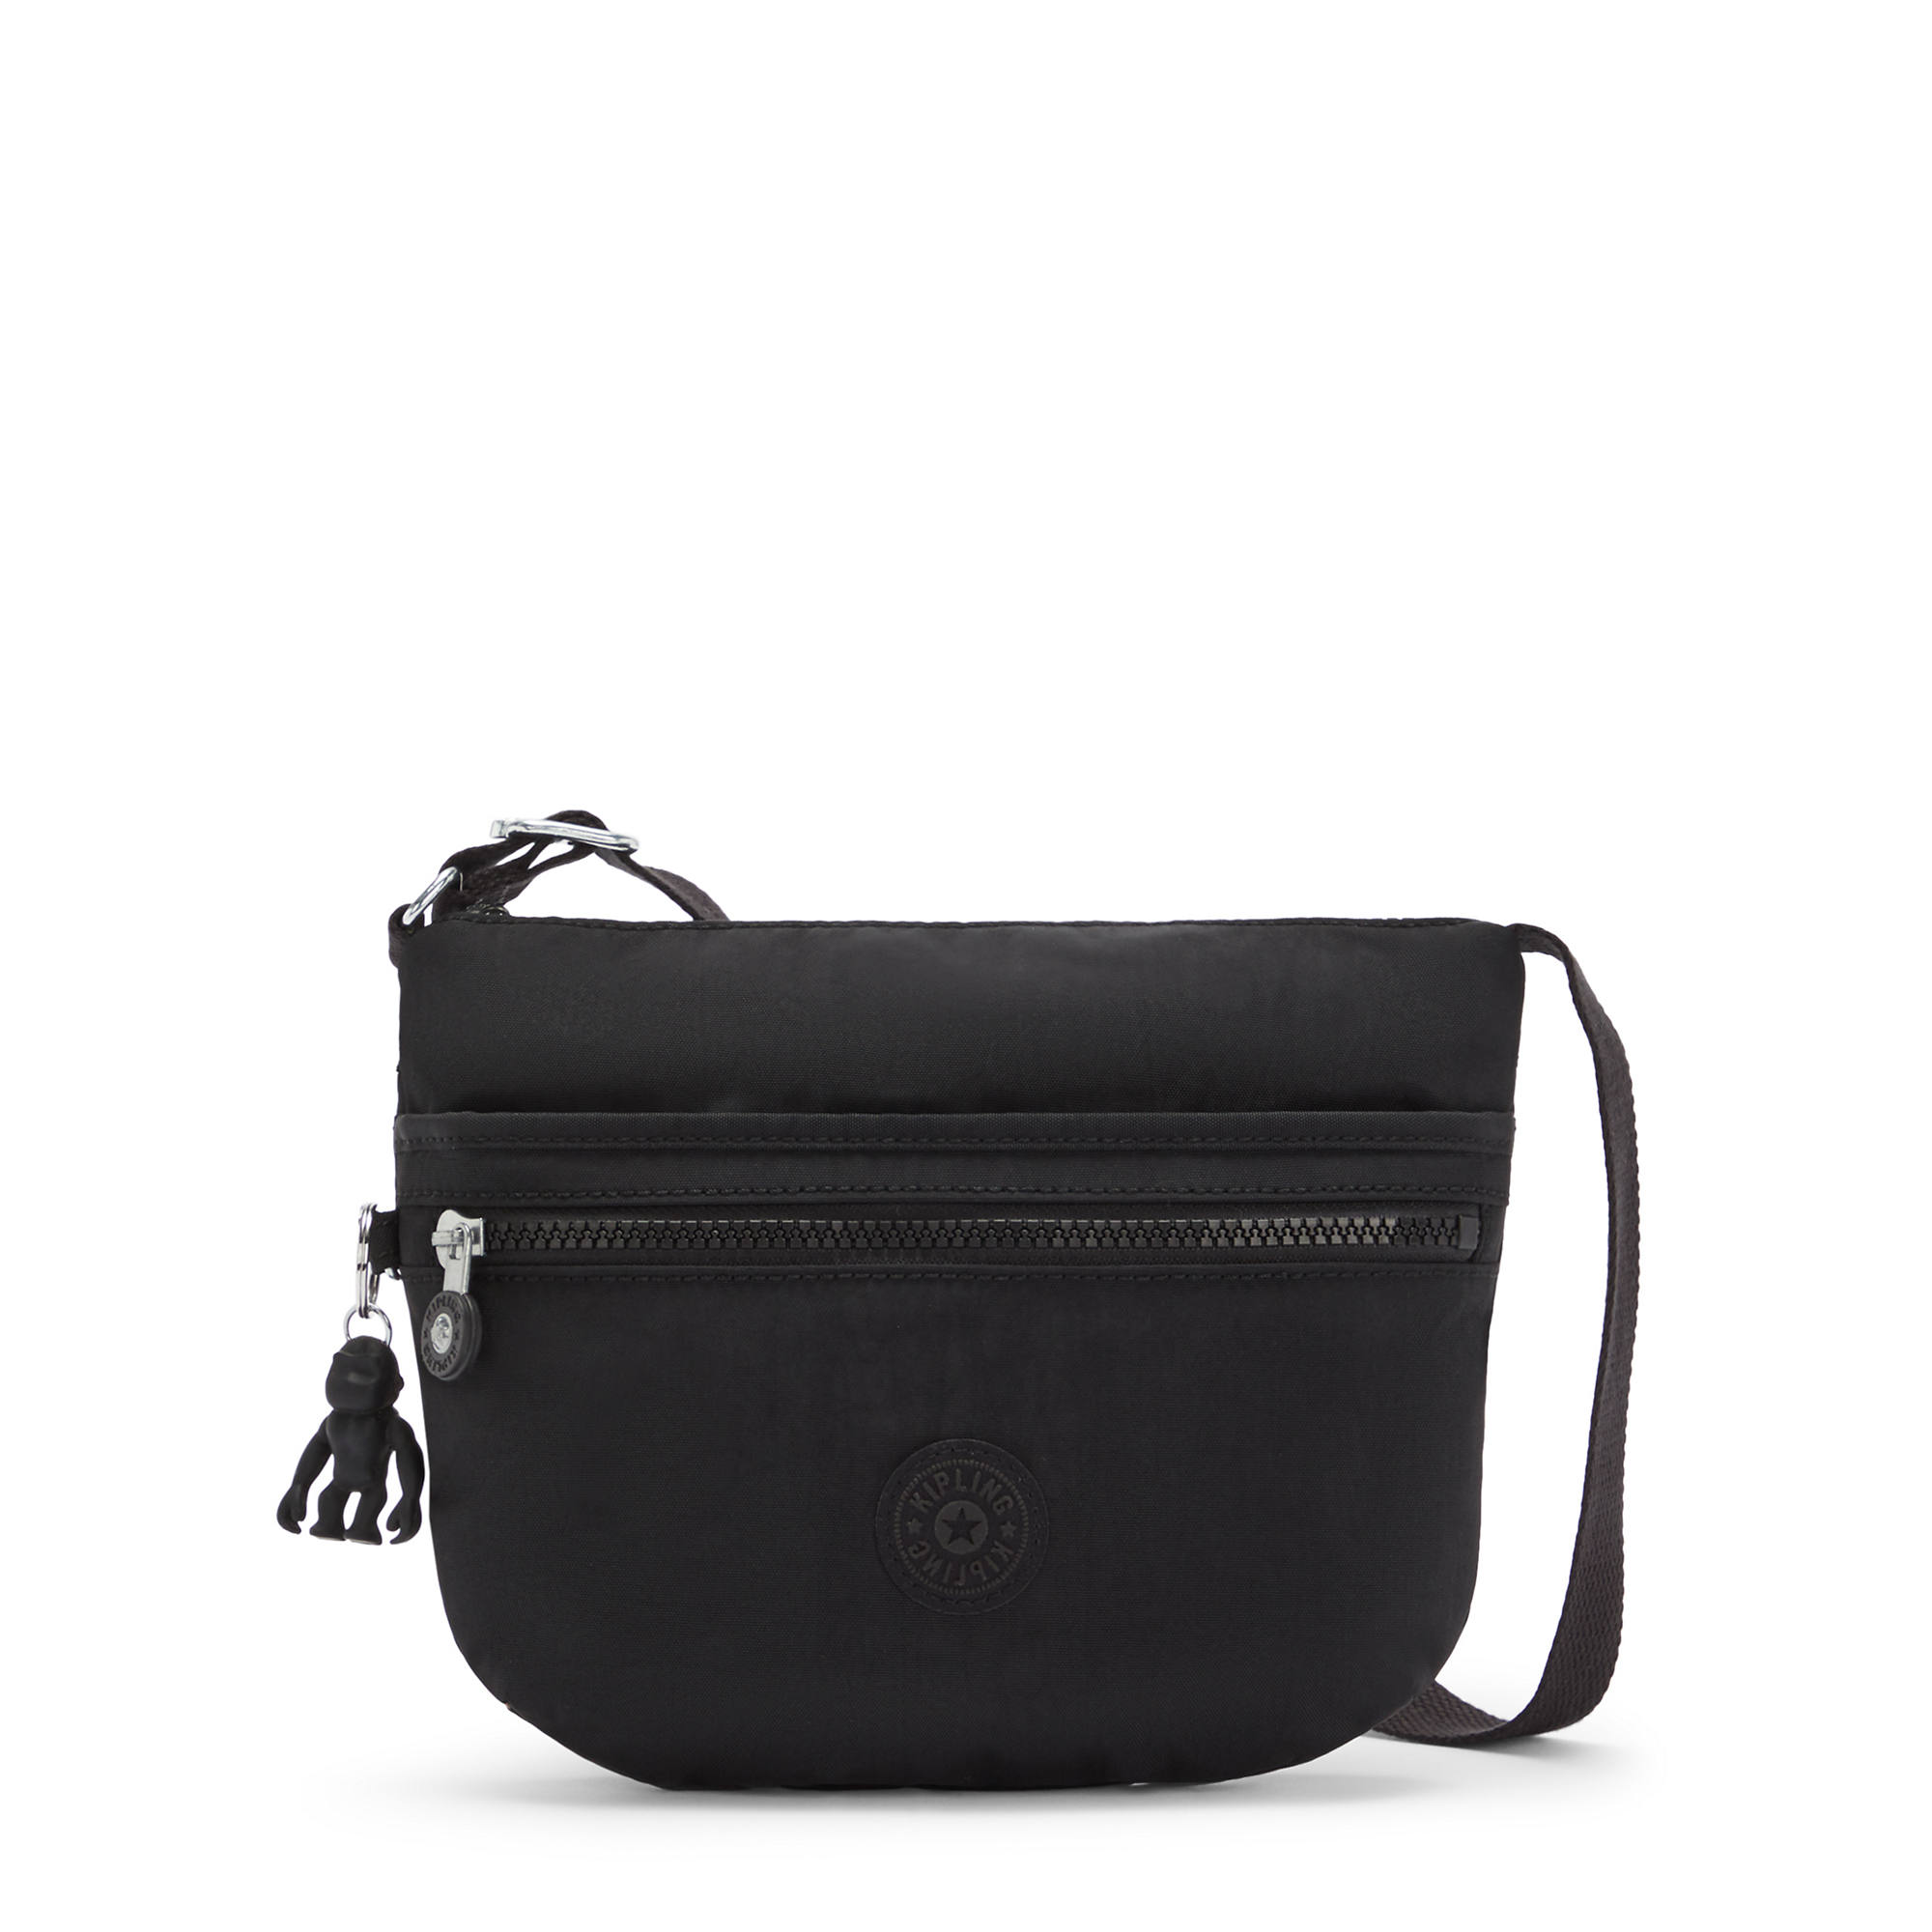 Arto Small Crossbody Bag, Black Noir, large-zoomed